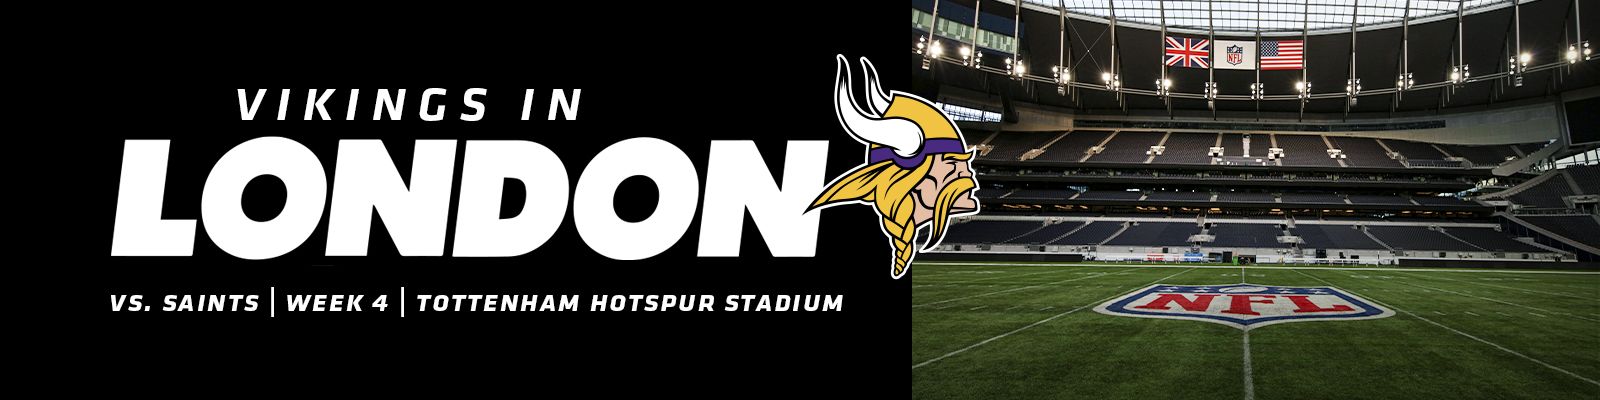 Minnesota Vikings vs. New Orleans Saints highlights